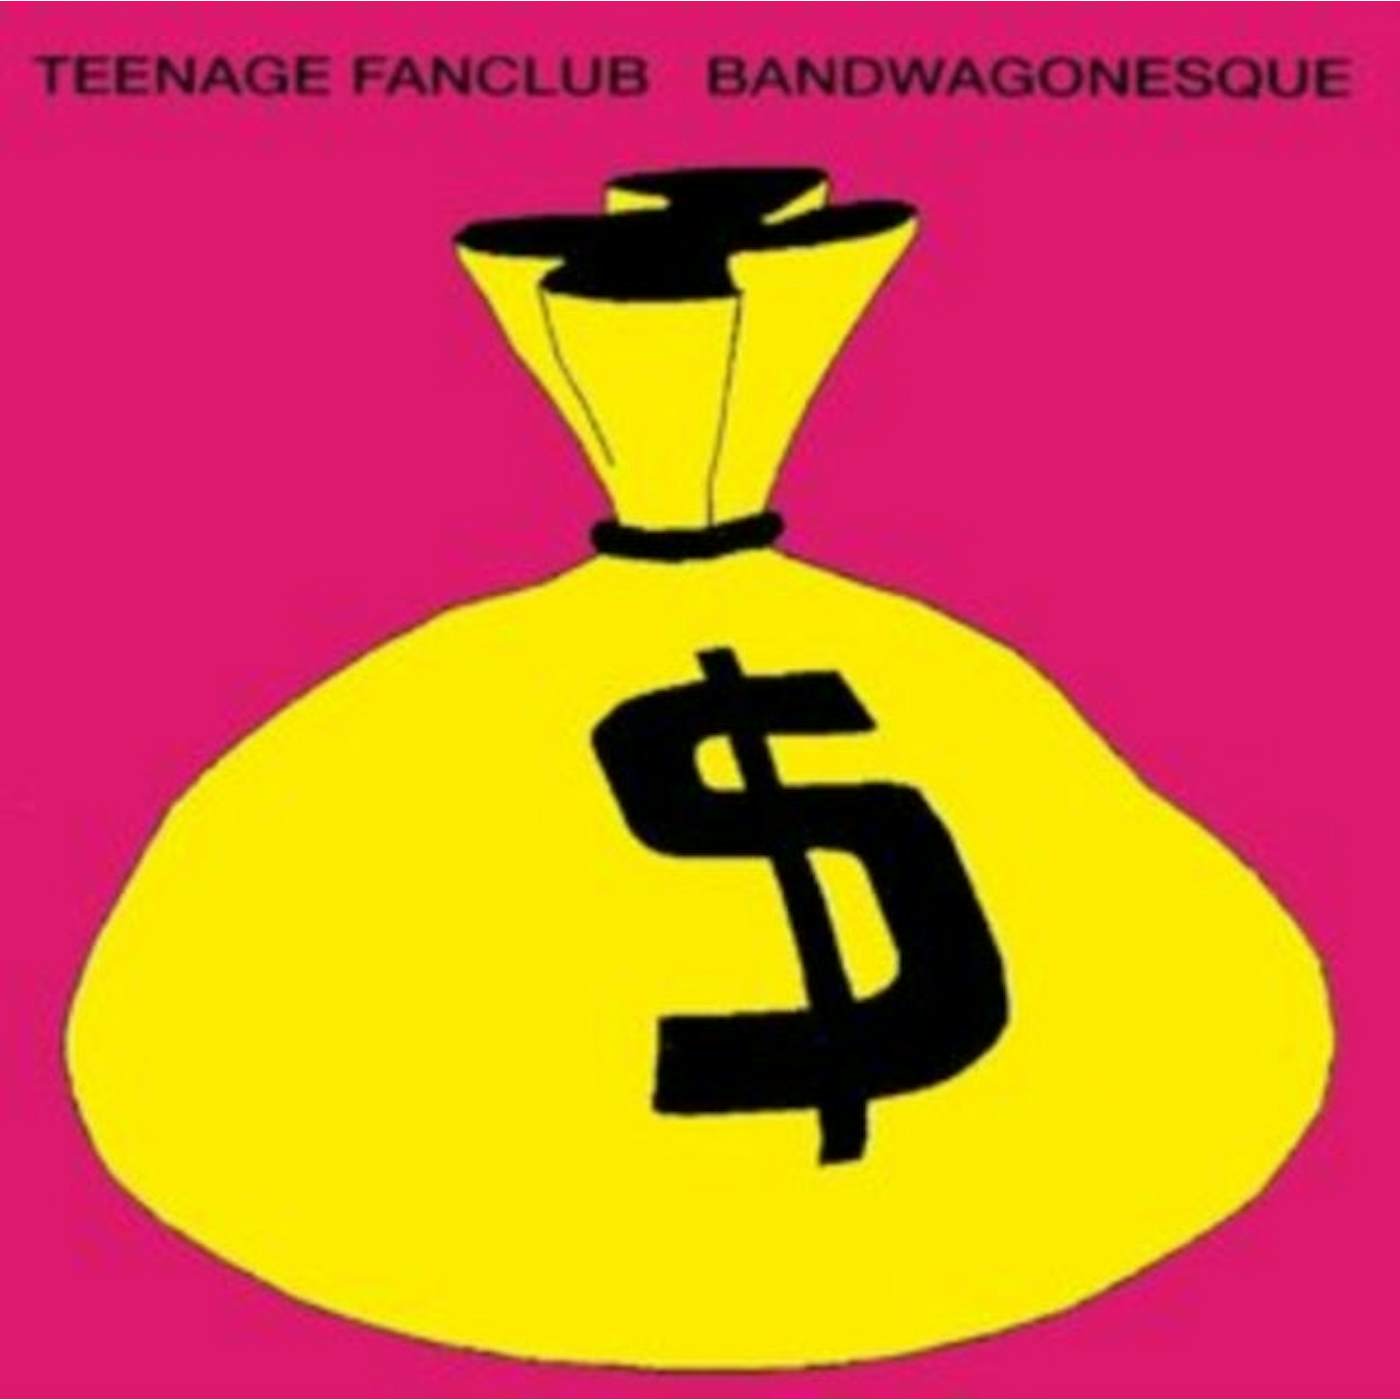 Teenage Fanclub LP Vinyl Record - Bandwagonesque